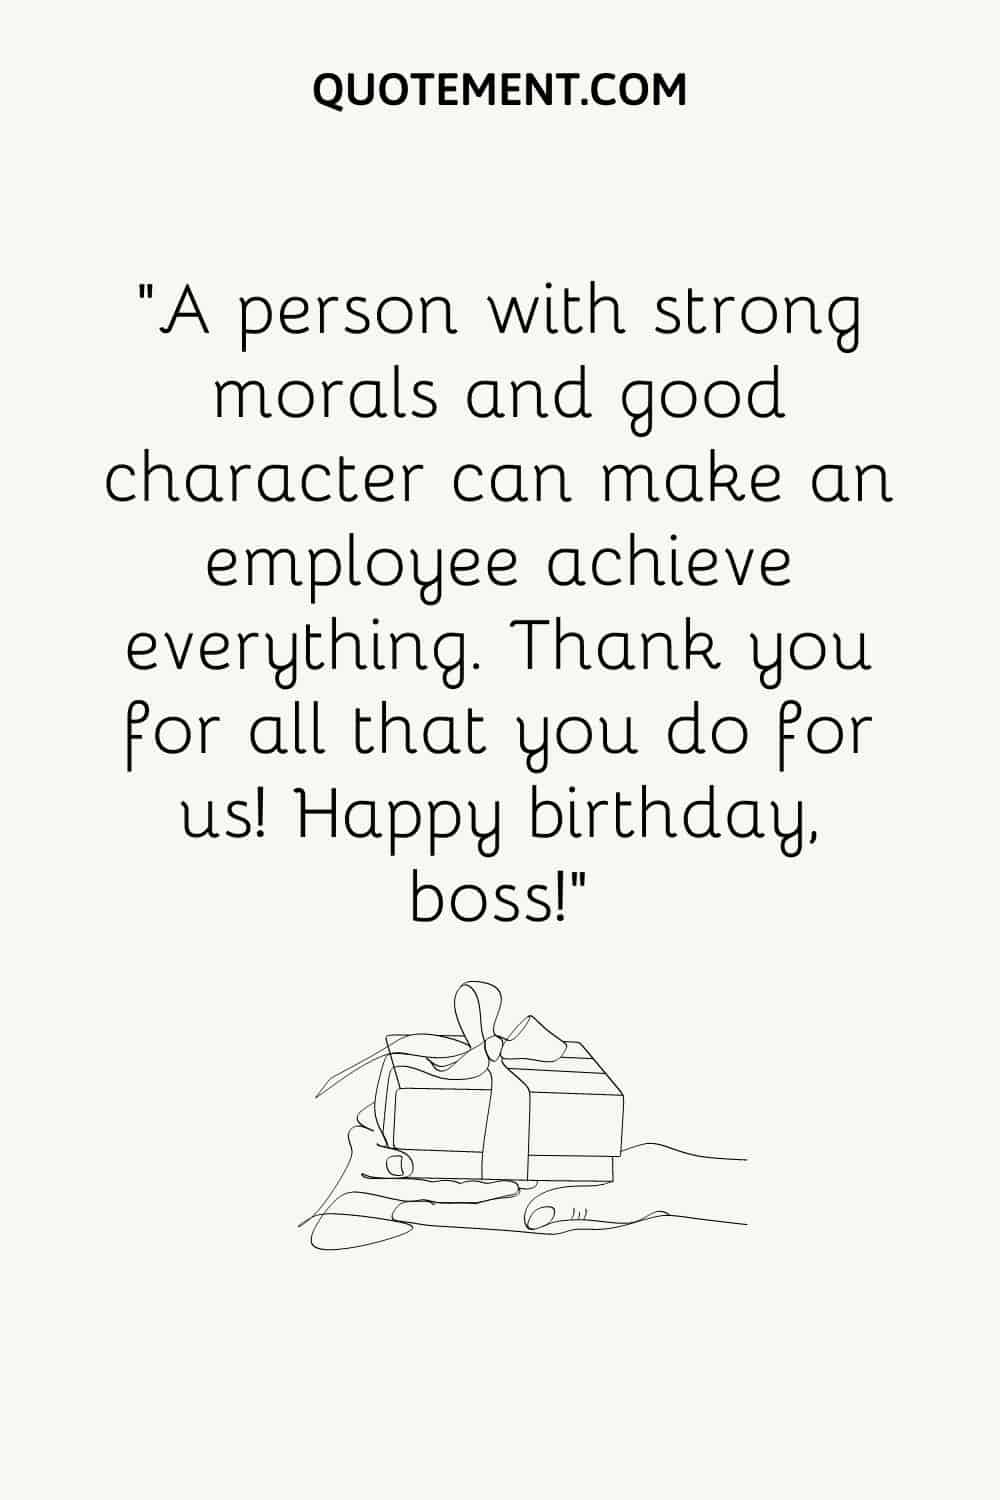 birthday gift in hands illustration representing formal happy birthday wish for boss
